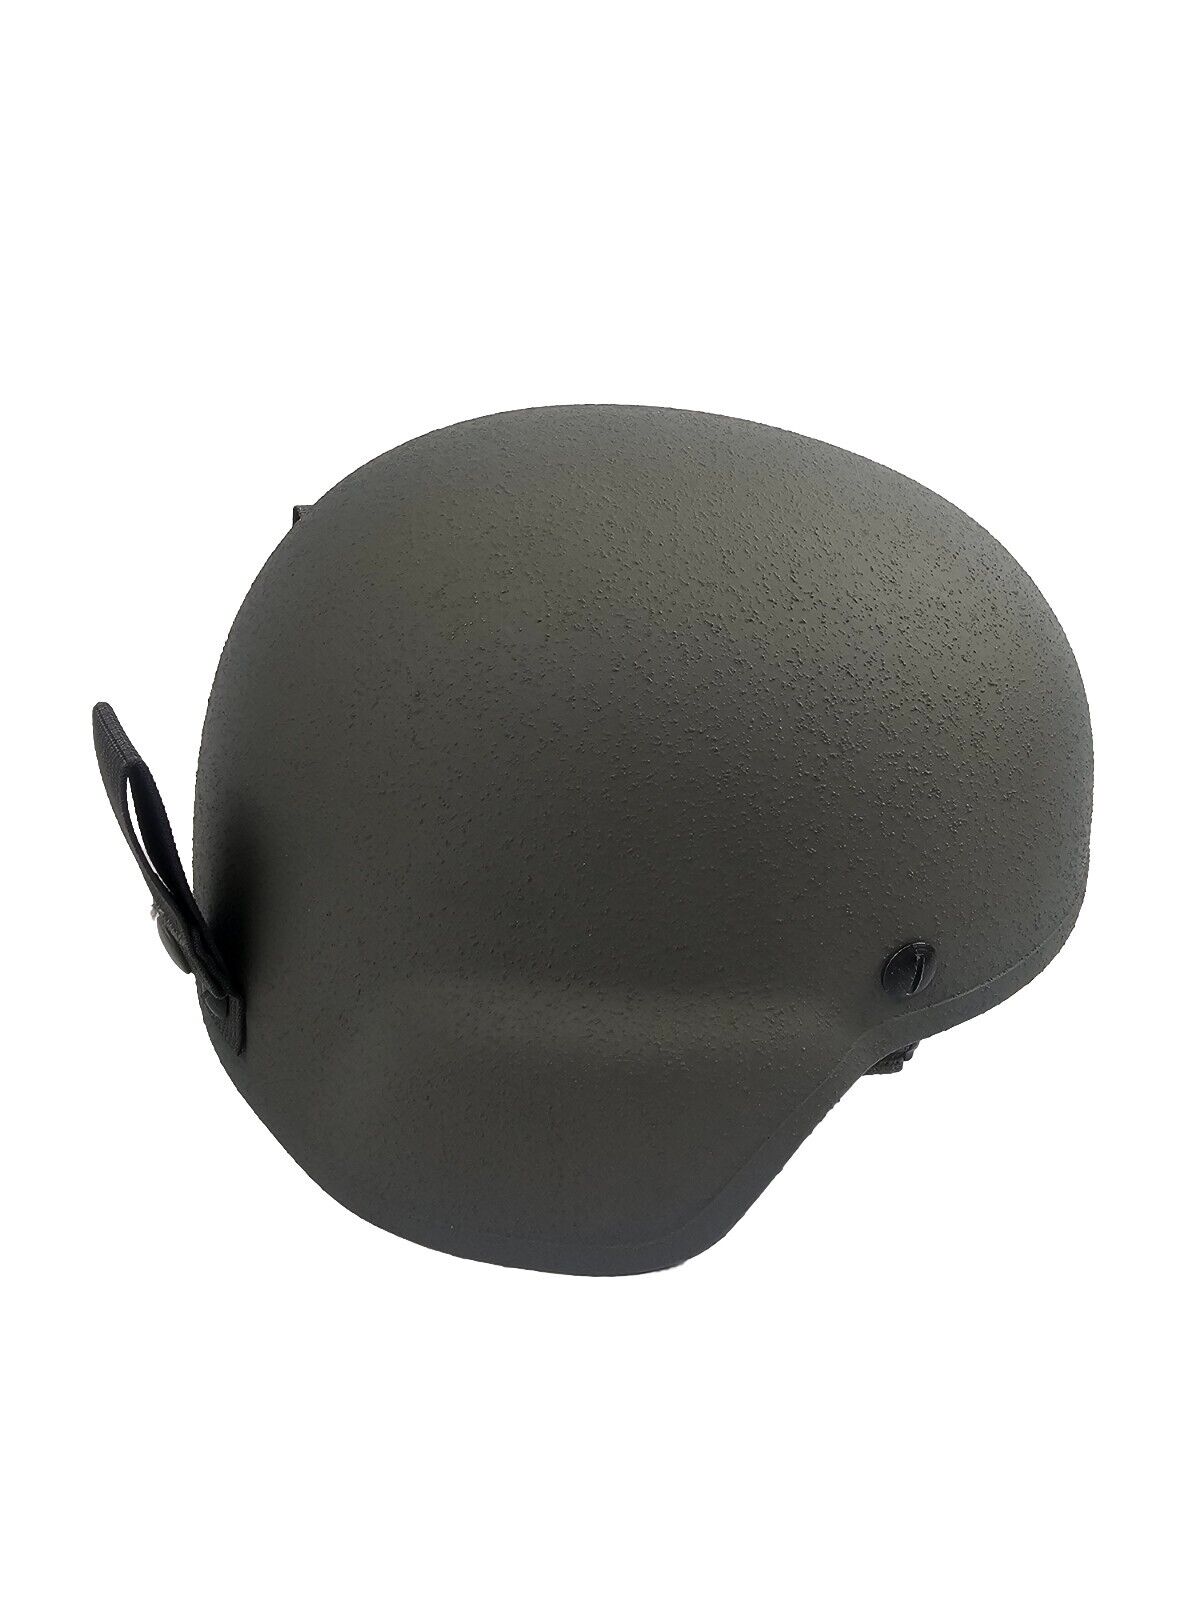 Gentex Advanced Combat Army Helmet ACH Size Large 8470-01-529-6344